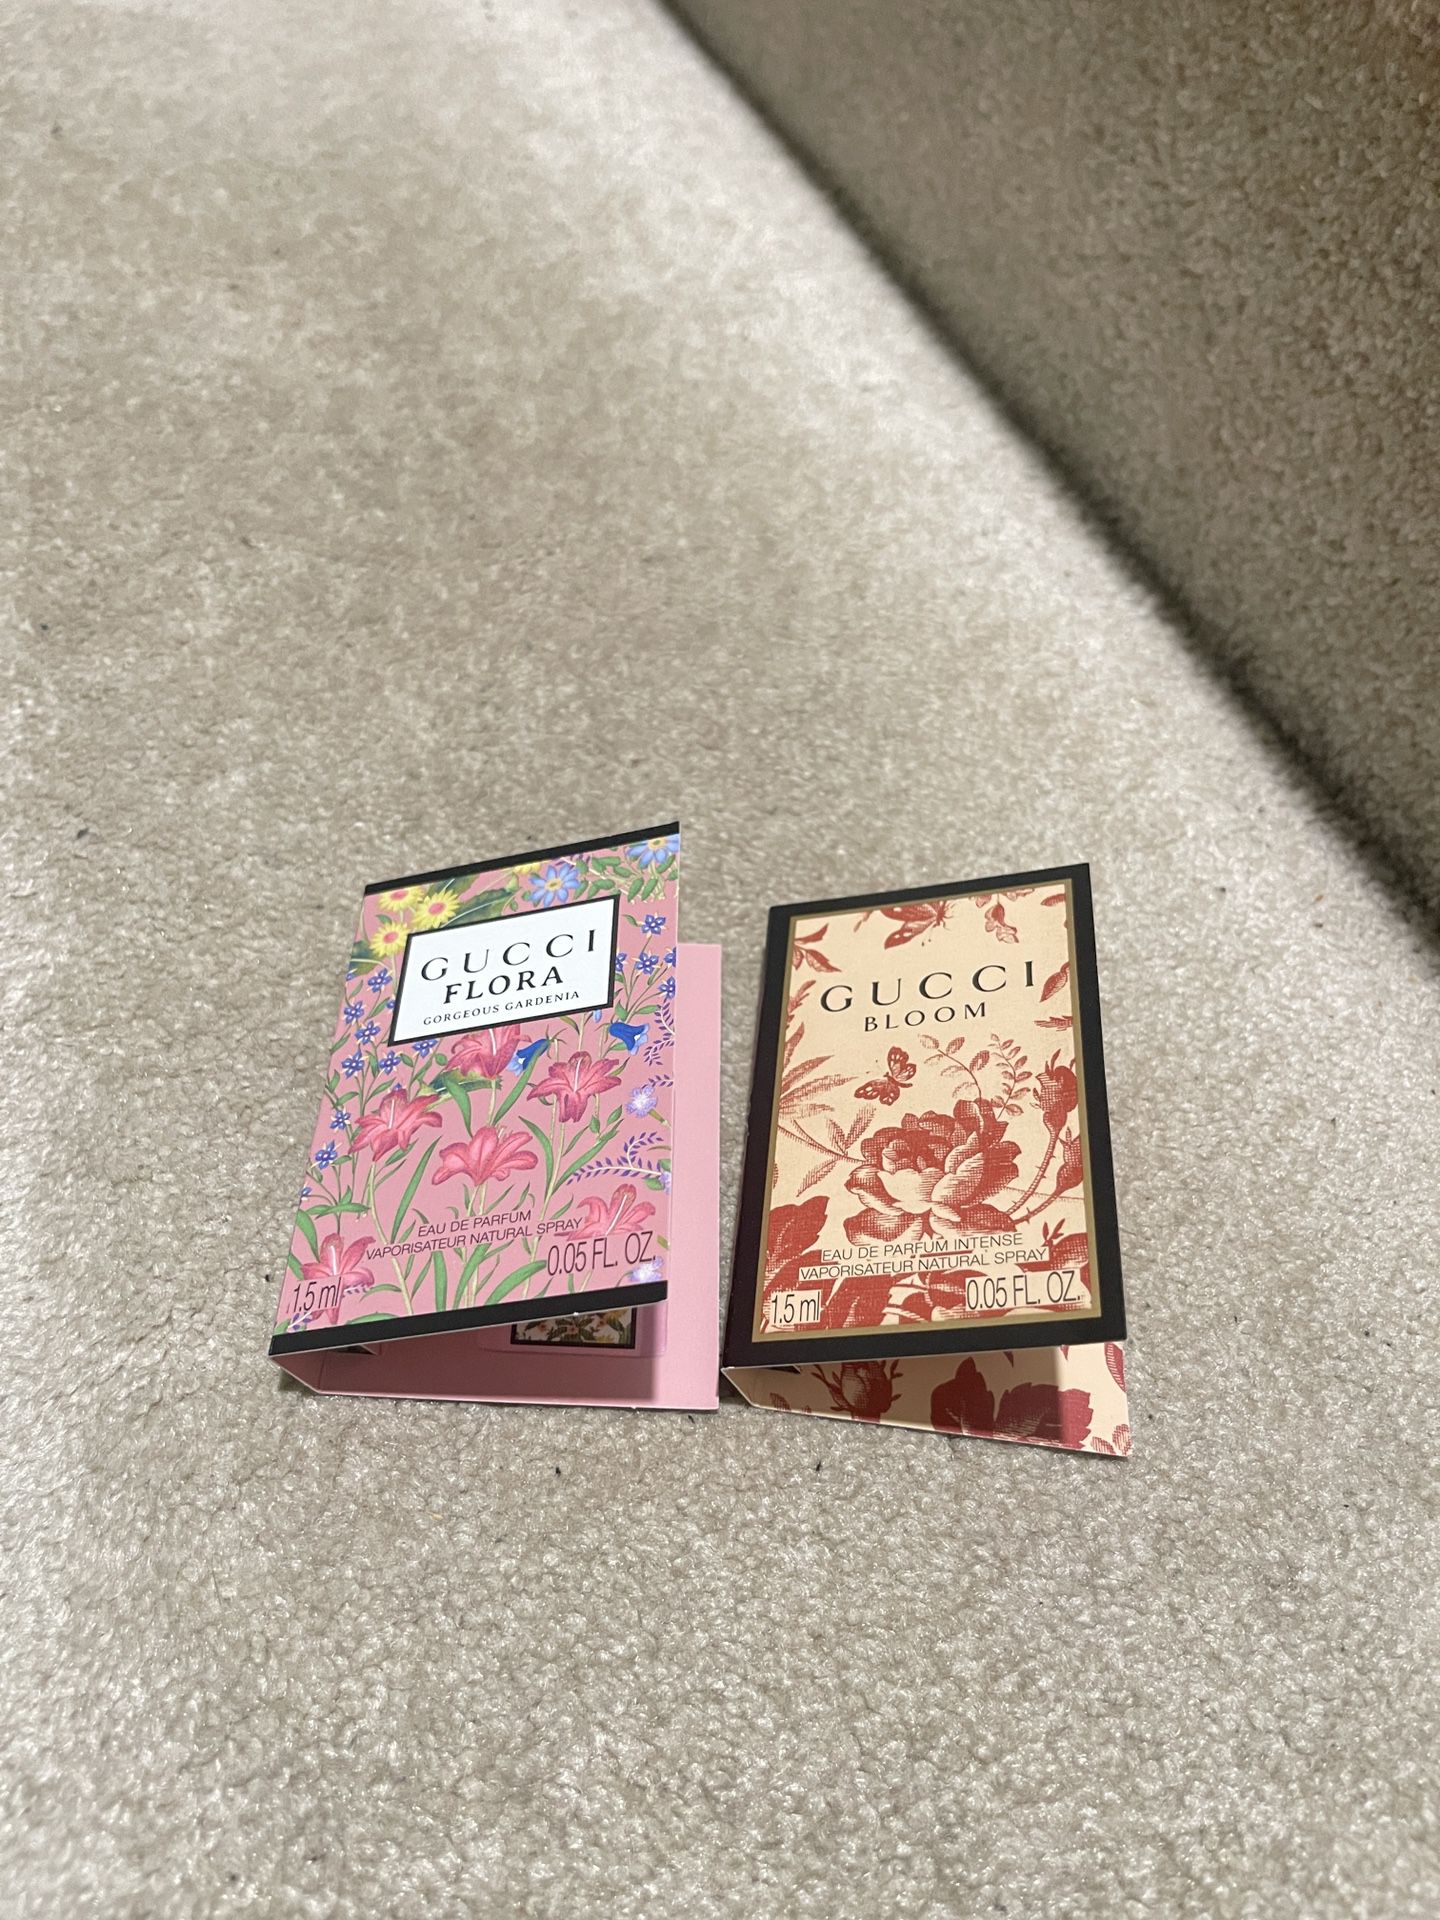 Gucci woman perfume sample set